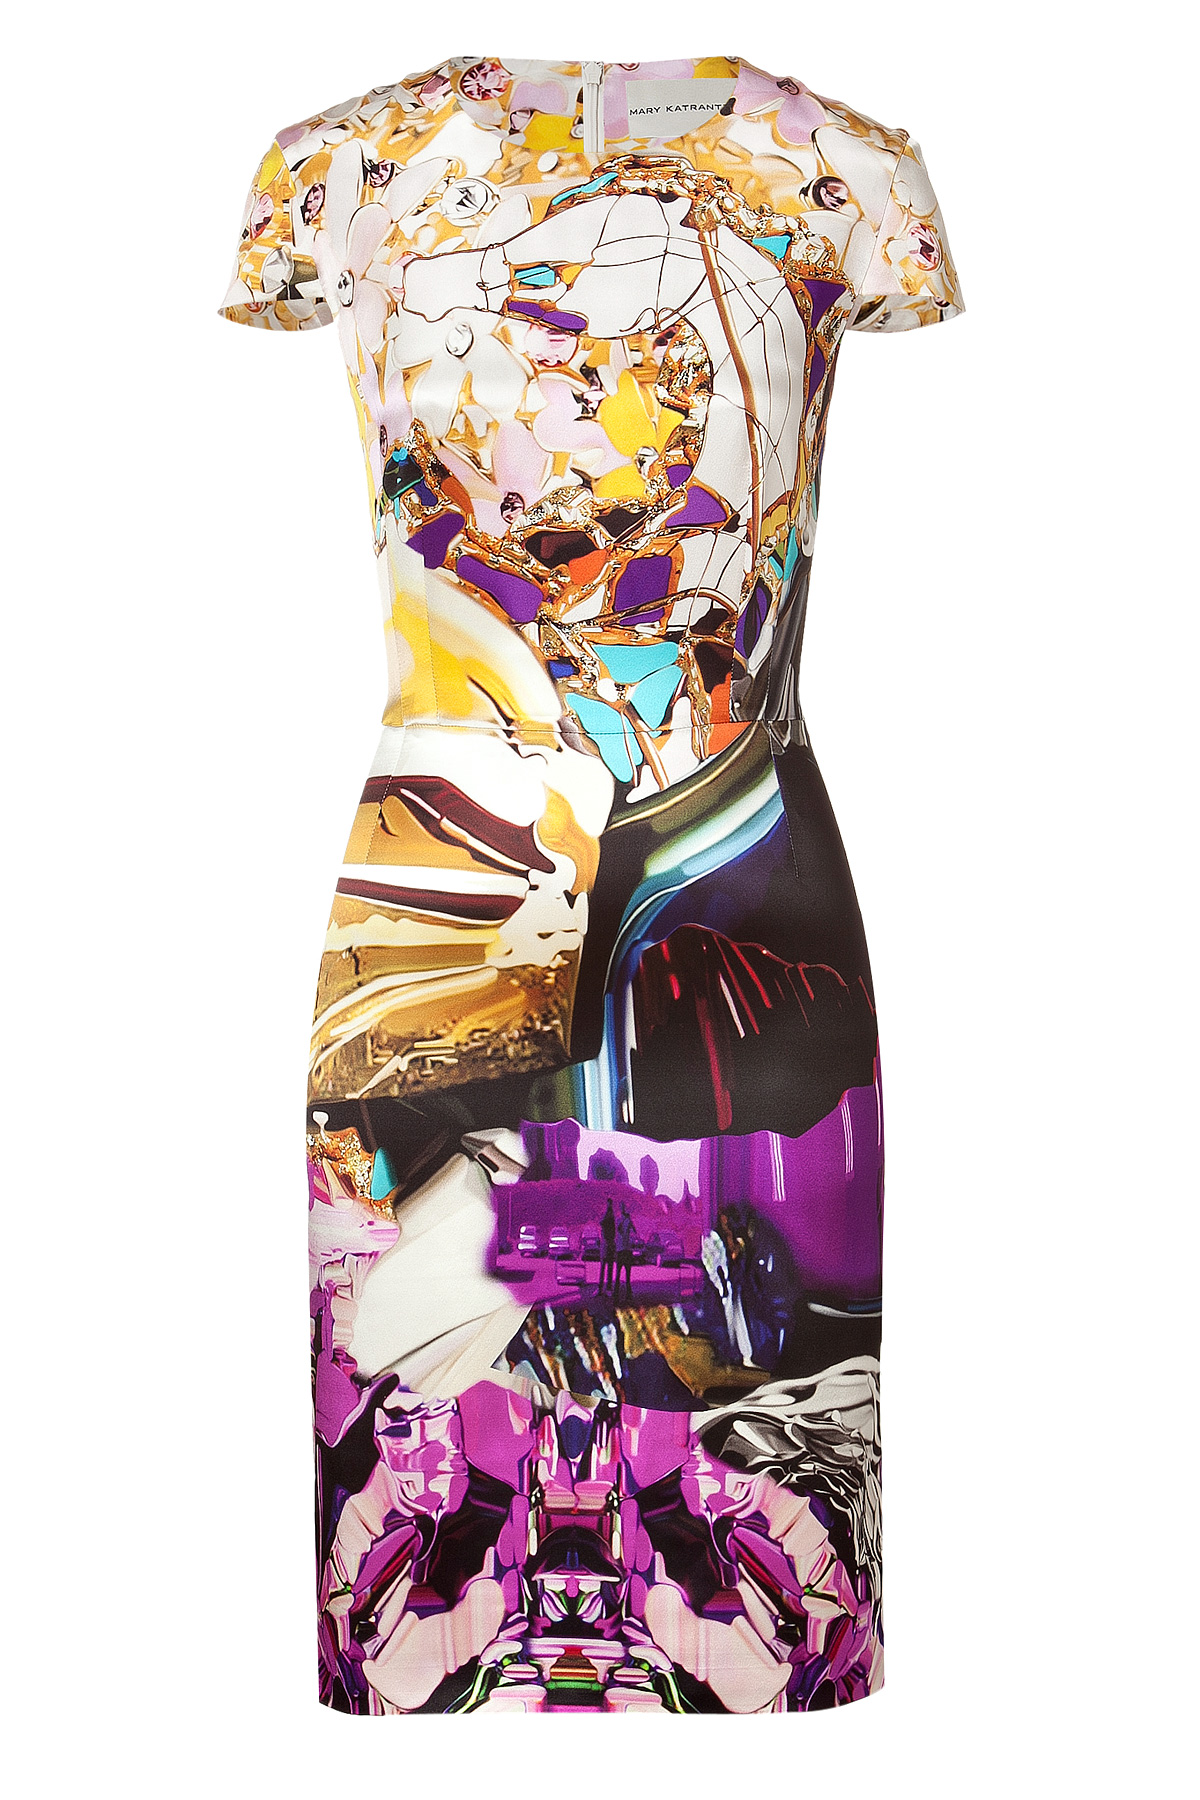 Mary katrantzou Multicolor Print Silk Dress in Multicolor | Lyst